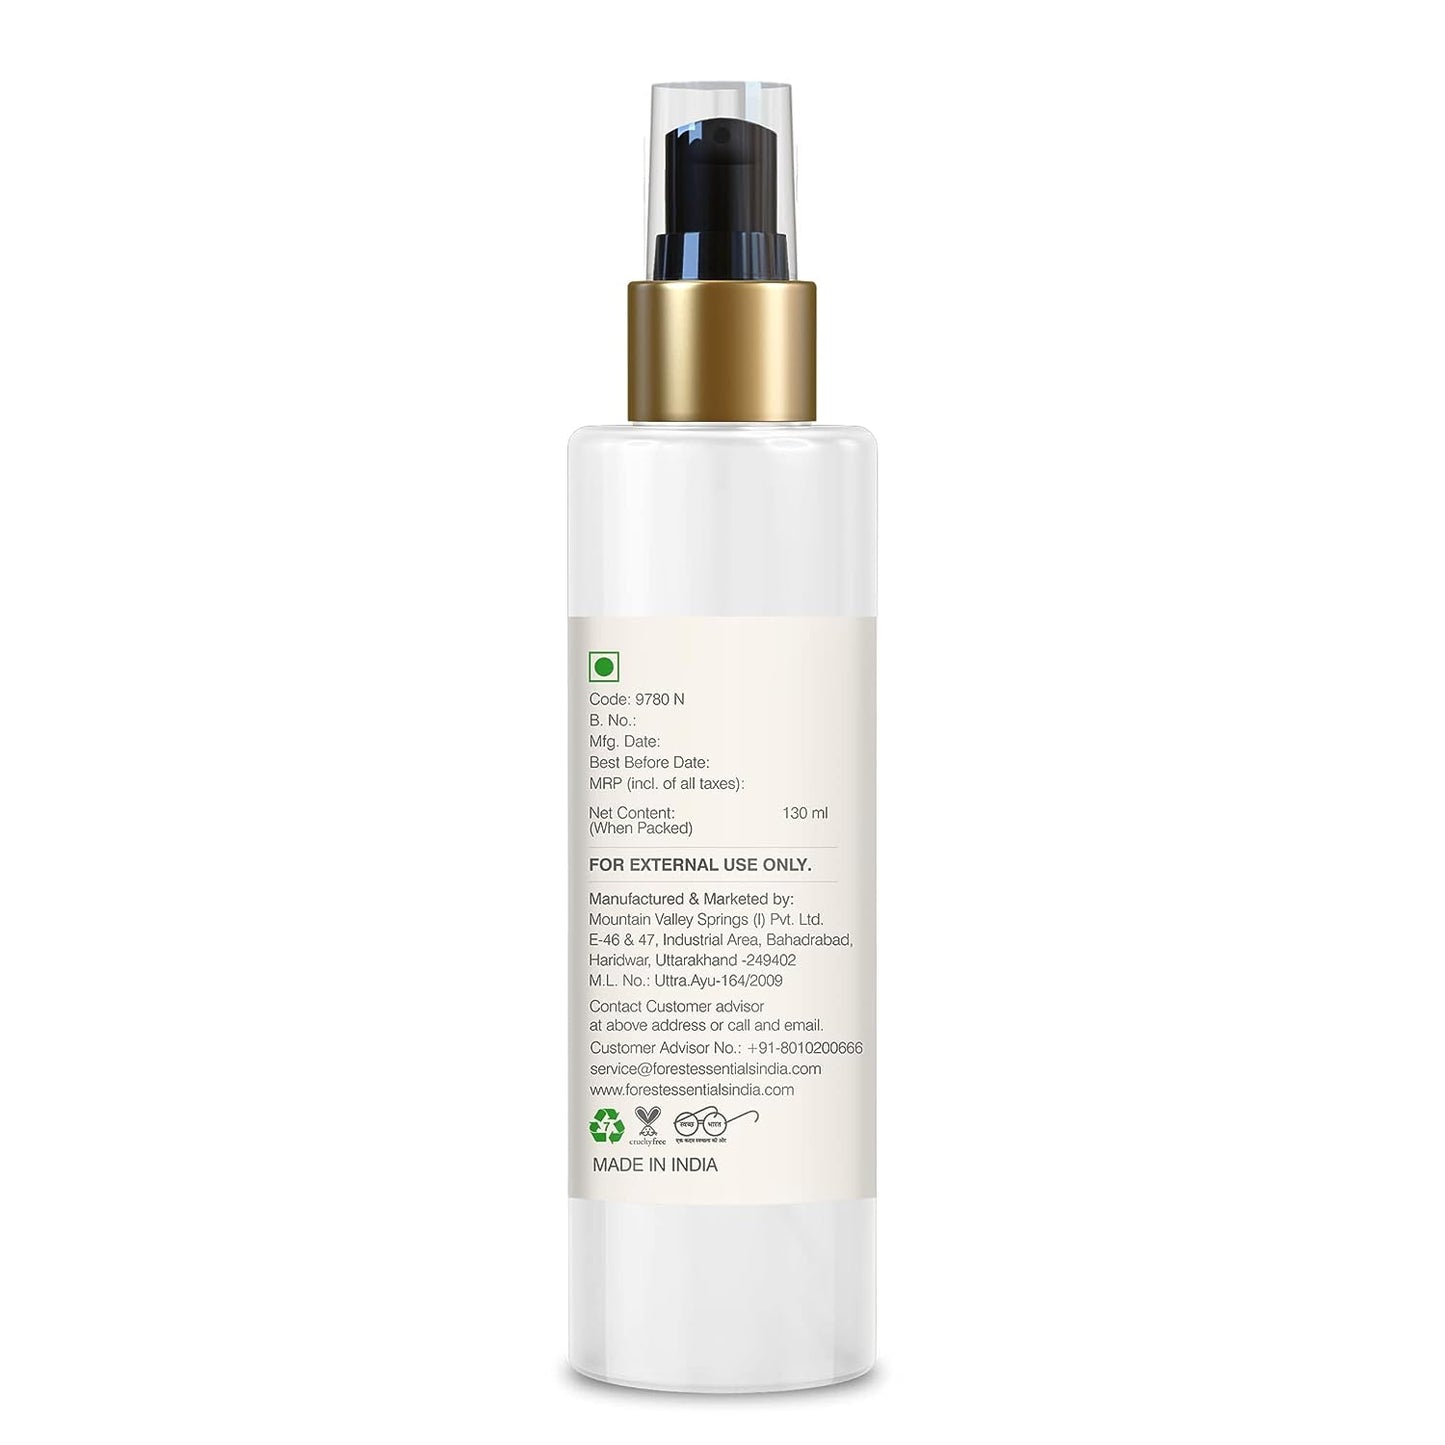 Forest Essentials Hydrating Facial Moisturiser Sandalwood & Orange Peel with SPF 25, 130 ml